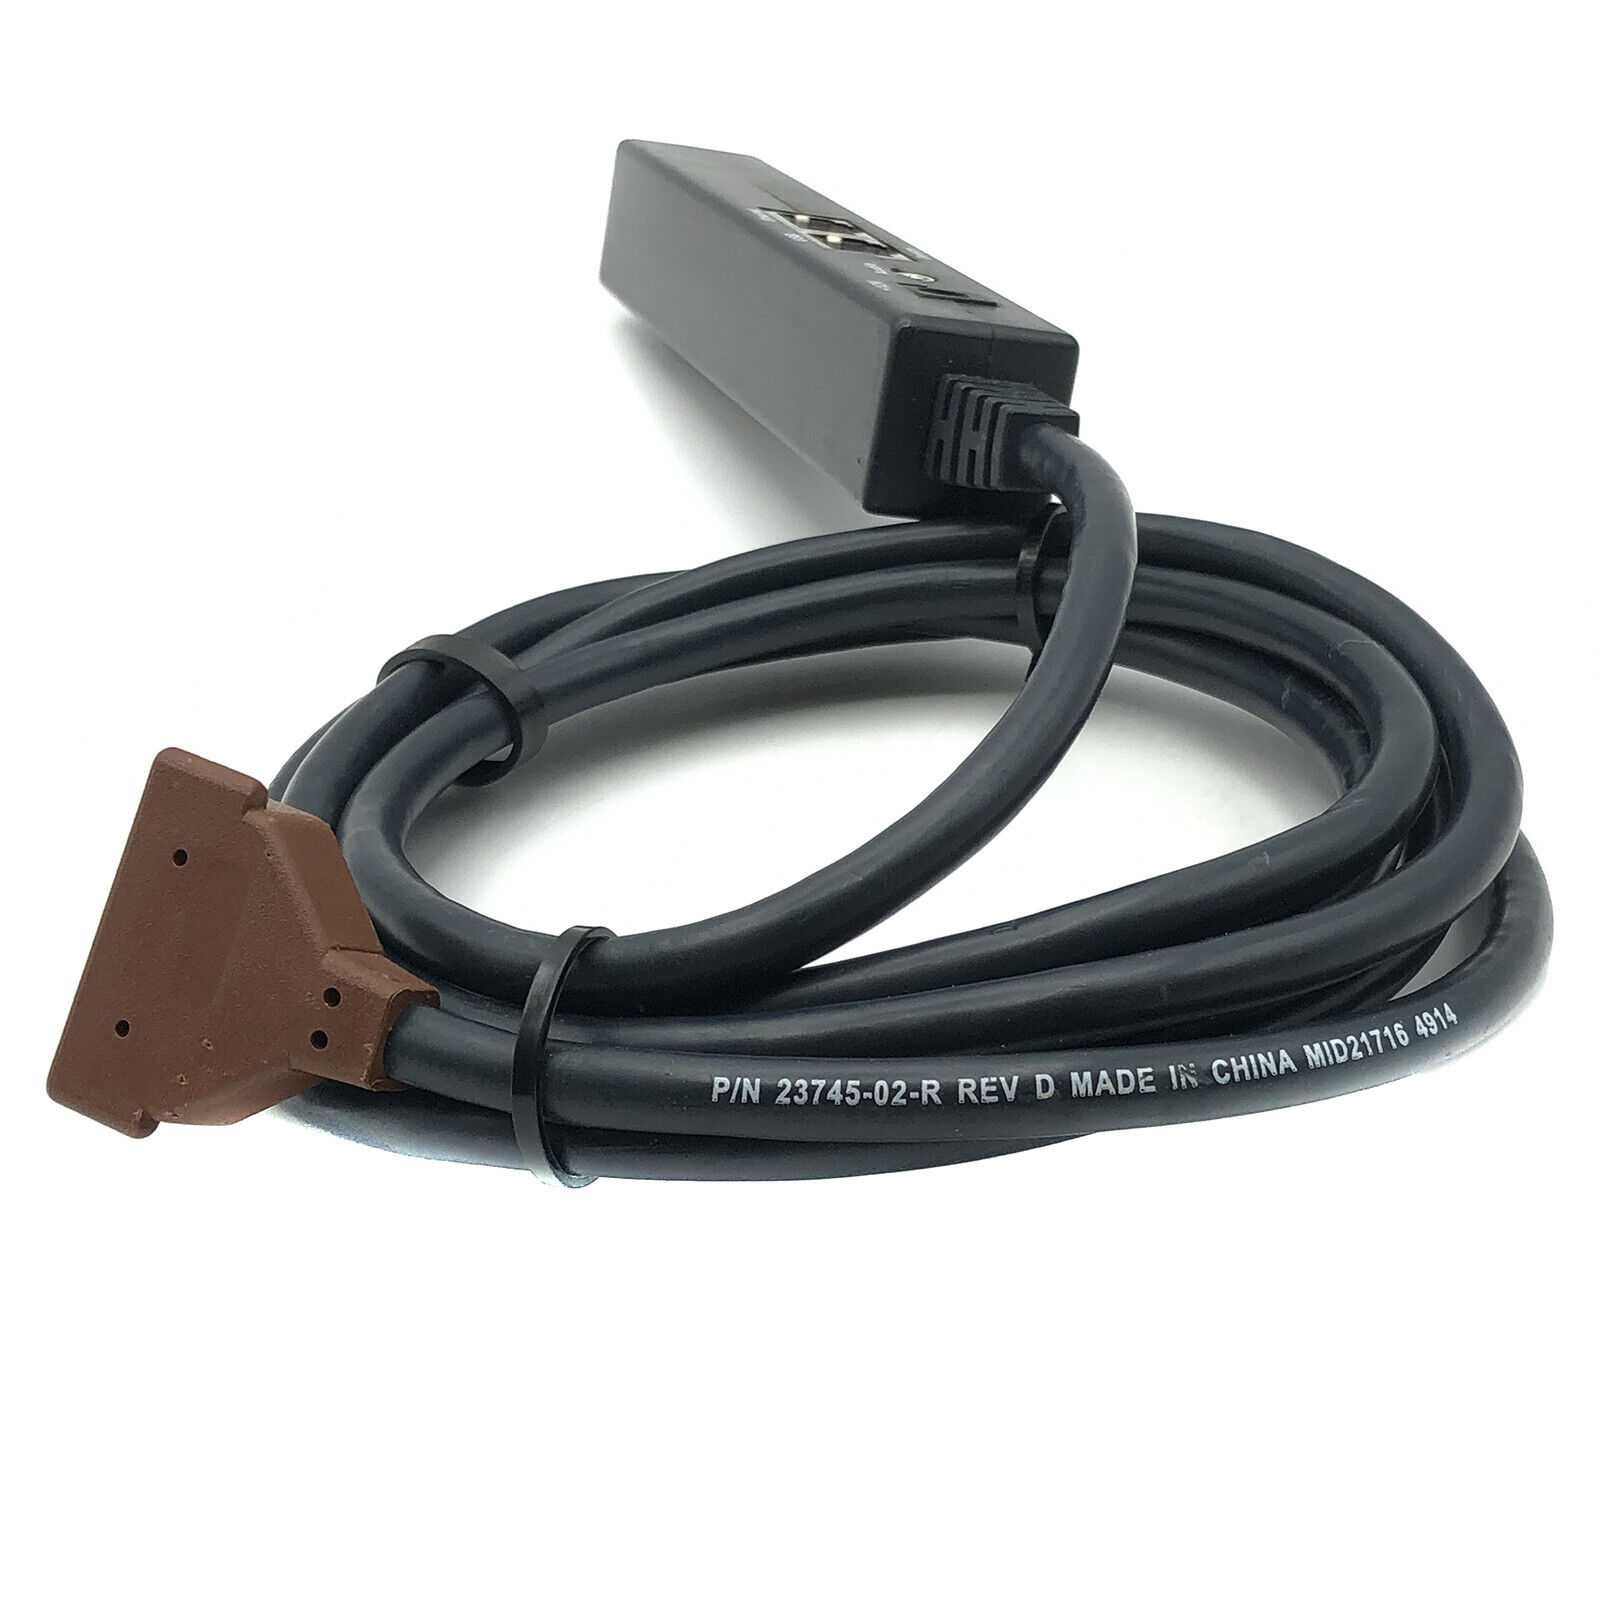 Genuine VeriFone Brown Mx Cable for Mx850 Mx860 Mx870 Mx915 Mx925 Terminals